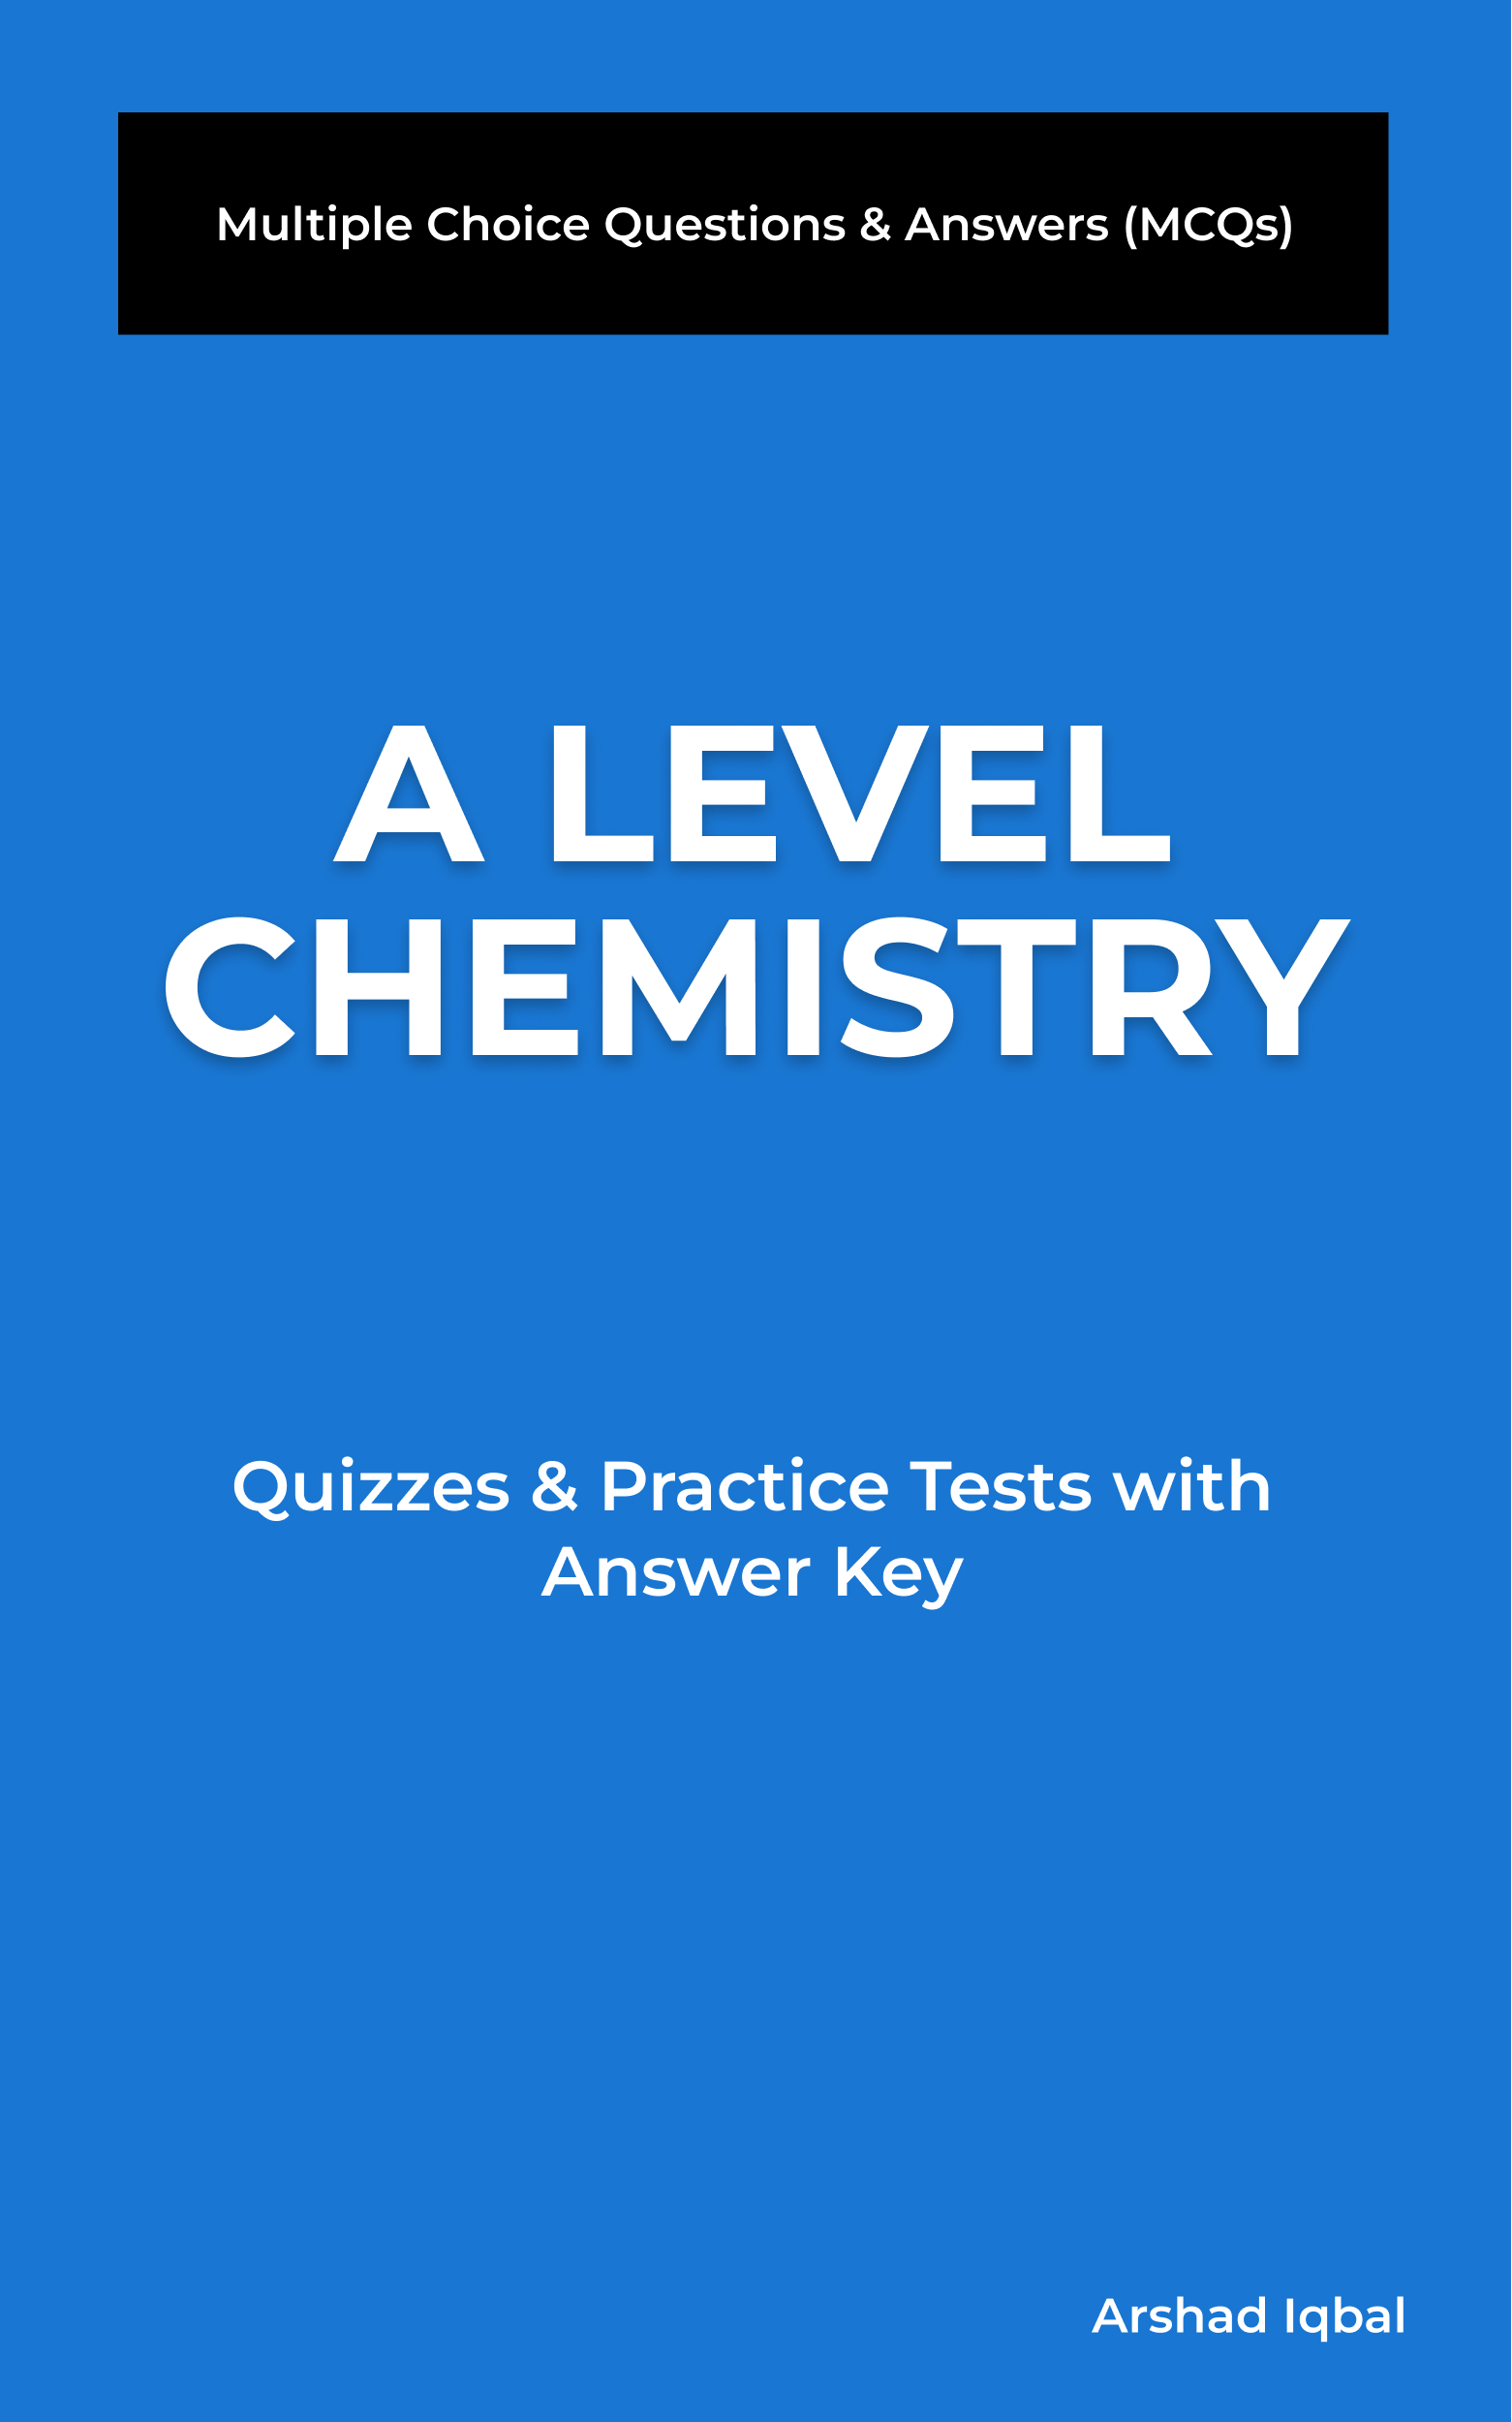 A level Chemistry MCQ Book PDF